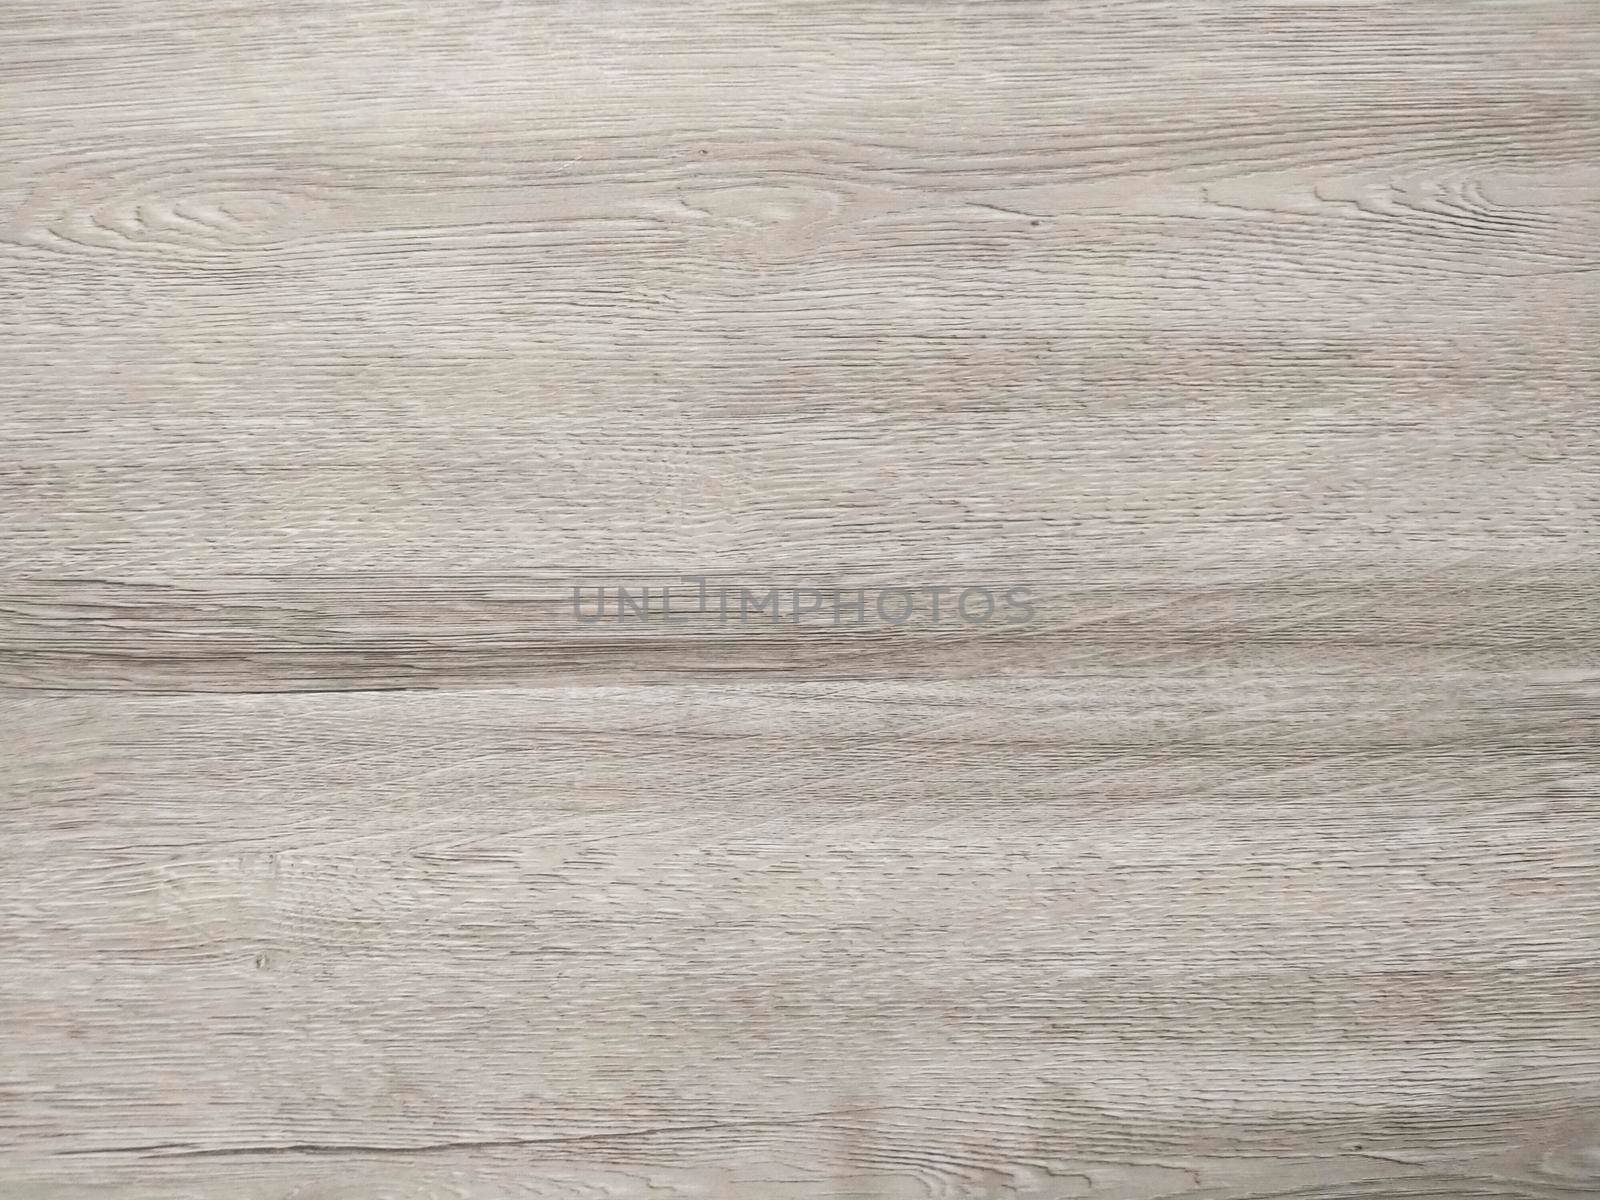 Natural Oak Texture. Gray wood oak floor texture natural pattern background.